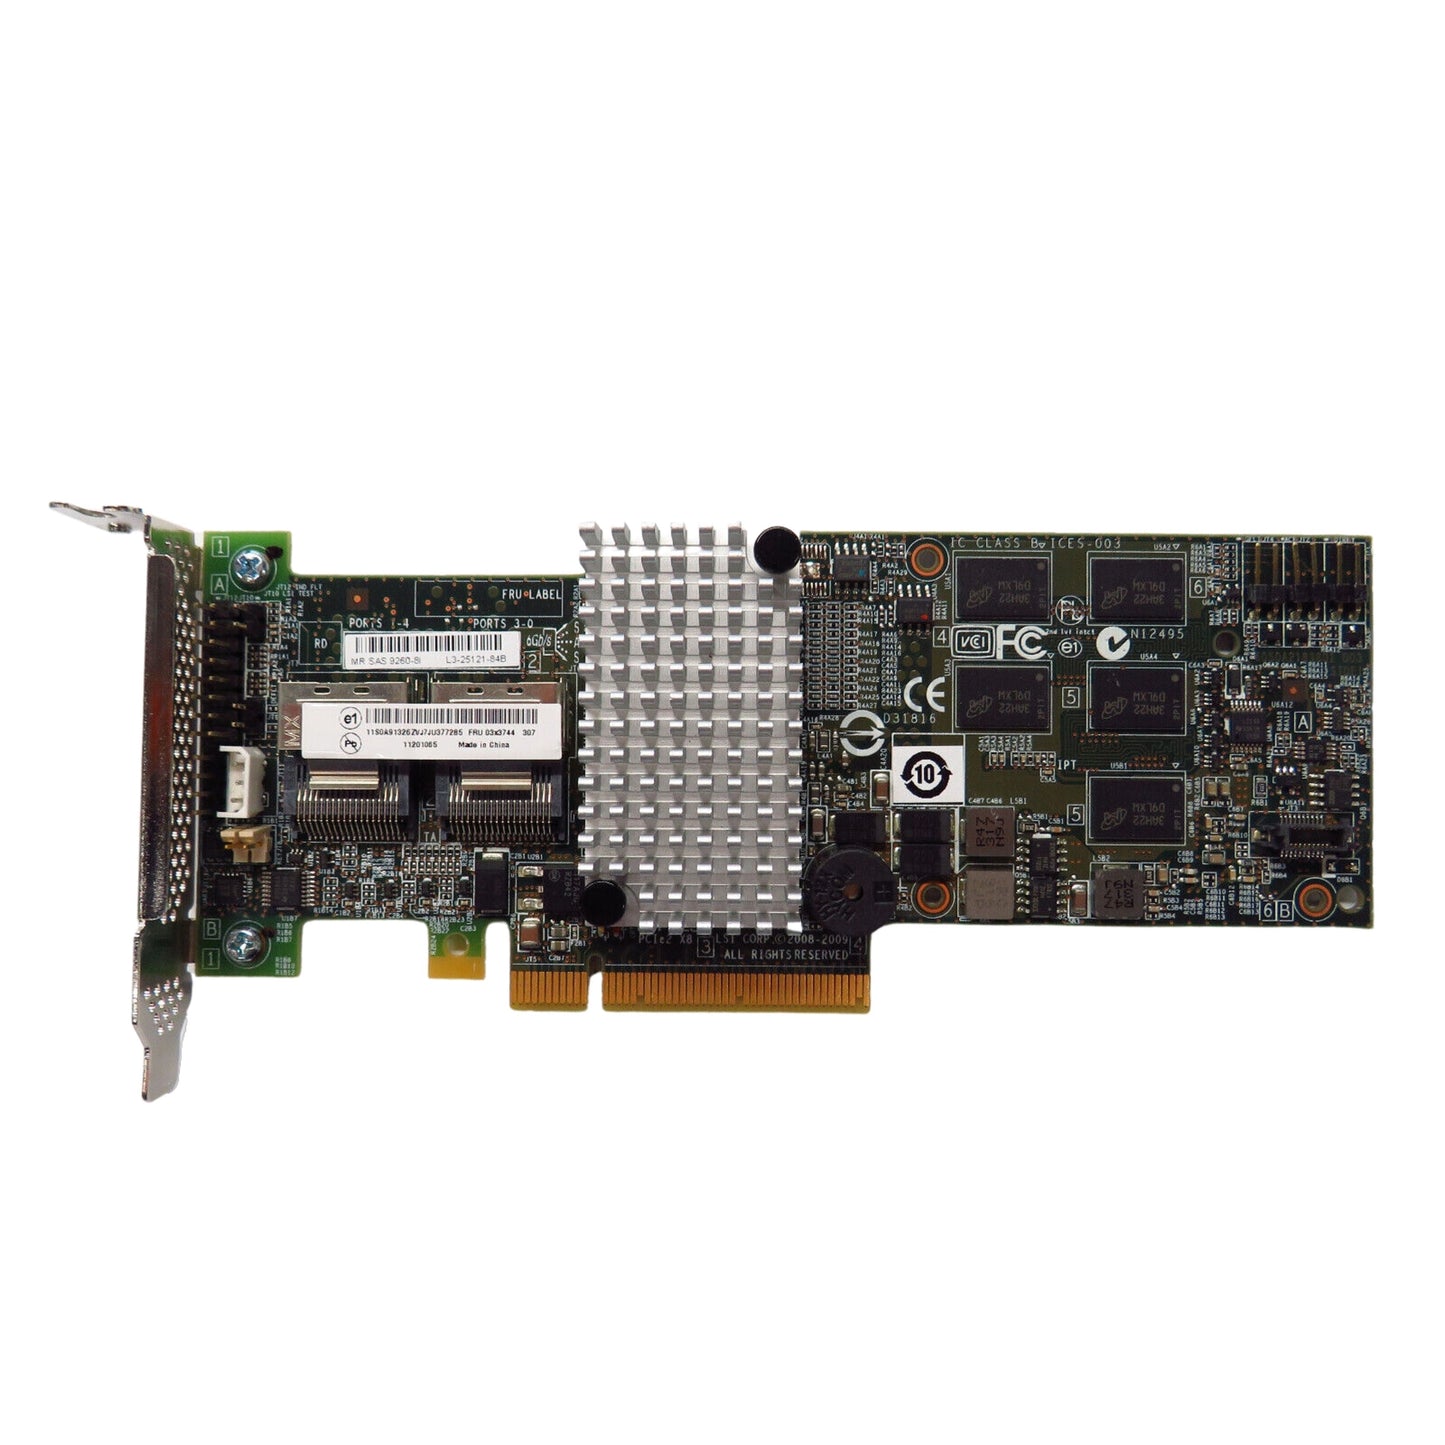 Lenovo 03X3744 MR SAS 9260-8i MegaRAID SAS/SATA 6Gbps RAID Controller Card (Refurbished)